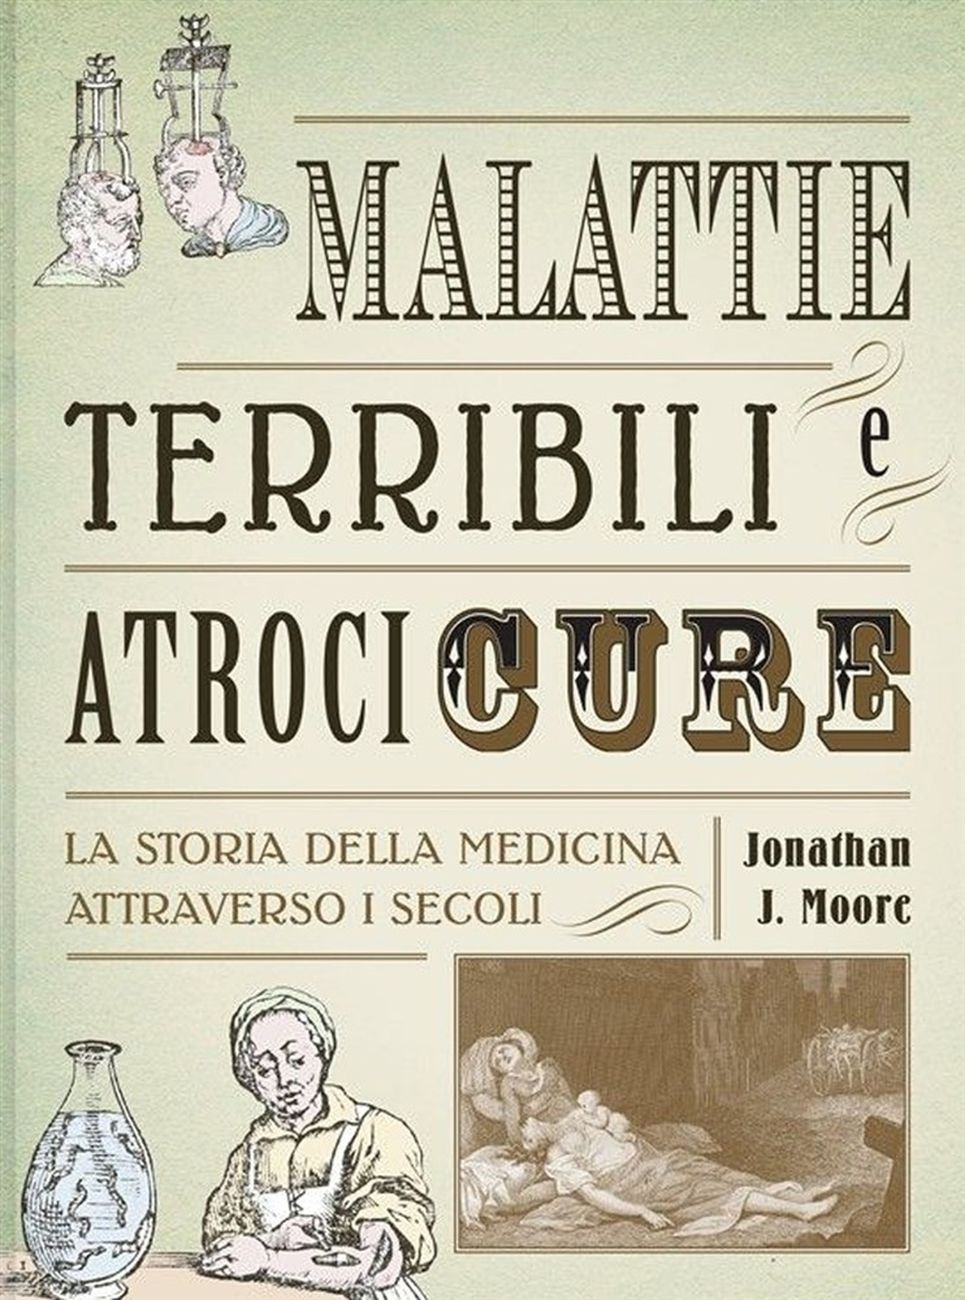 Jonathan J. Moore – Malattie terribili e atroci cure (Logos, Milano 2020)